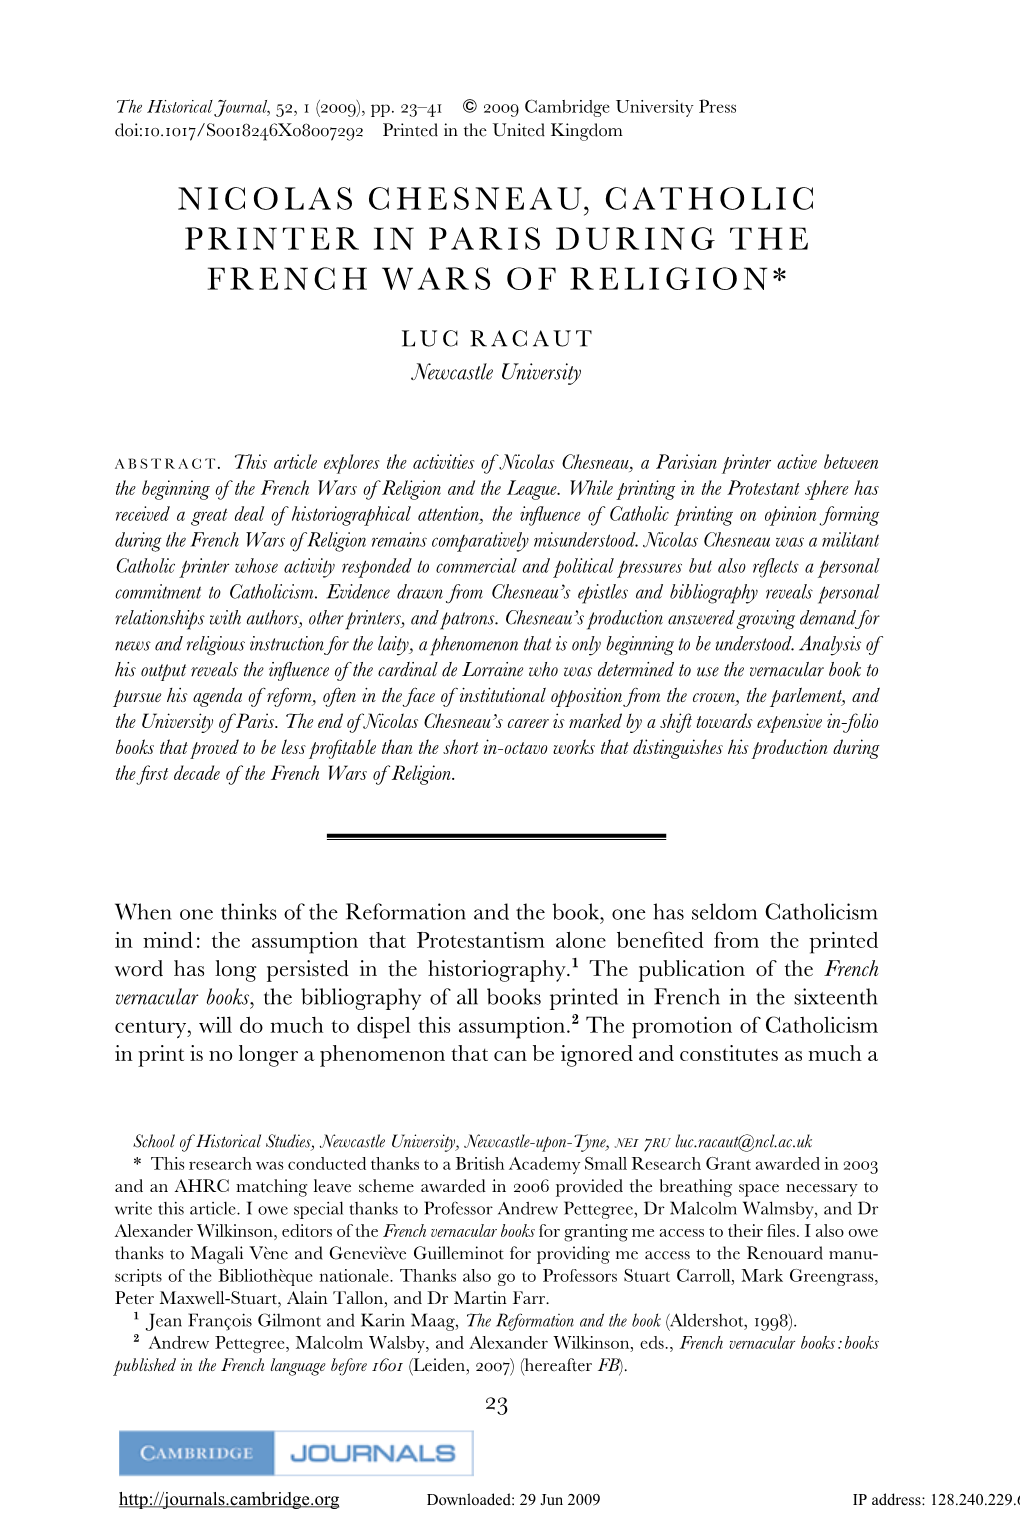 Nicolas Chesneau, Catholic Printer in Paris During the French Wars of Religion*